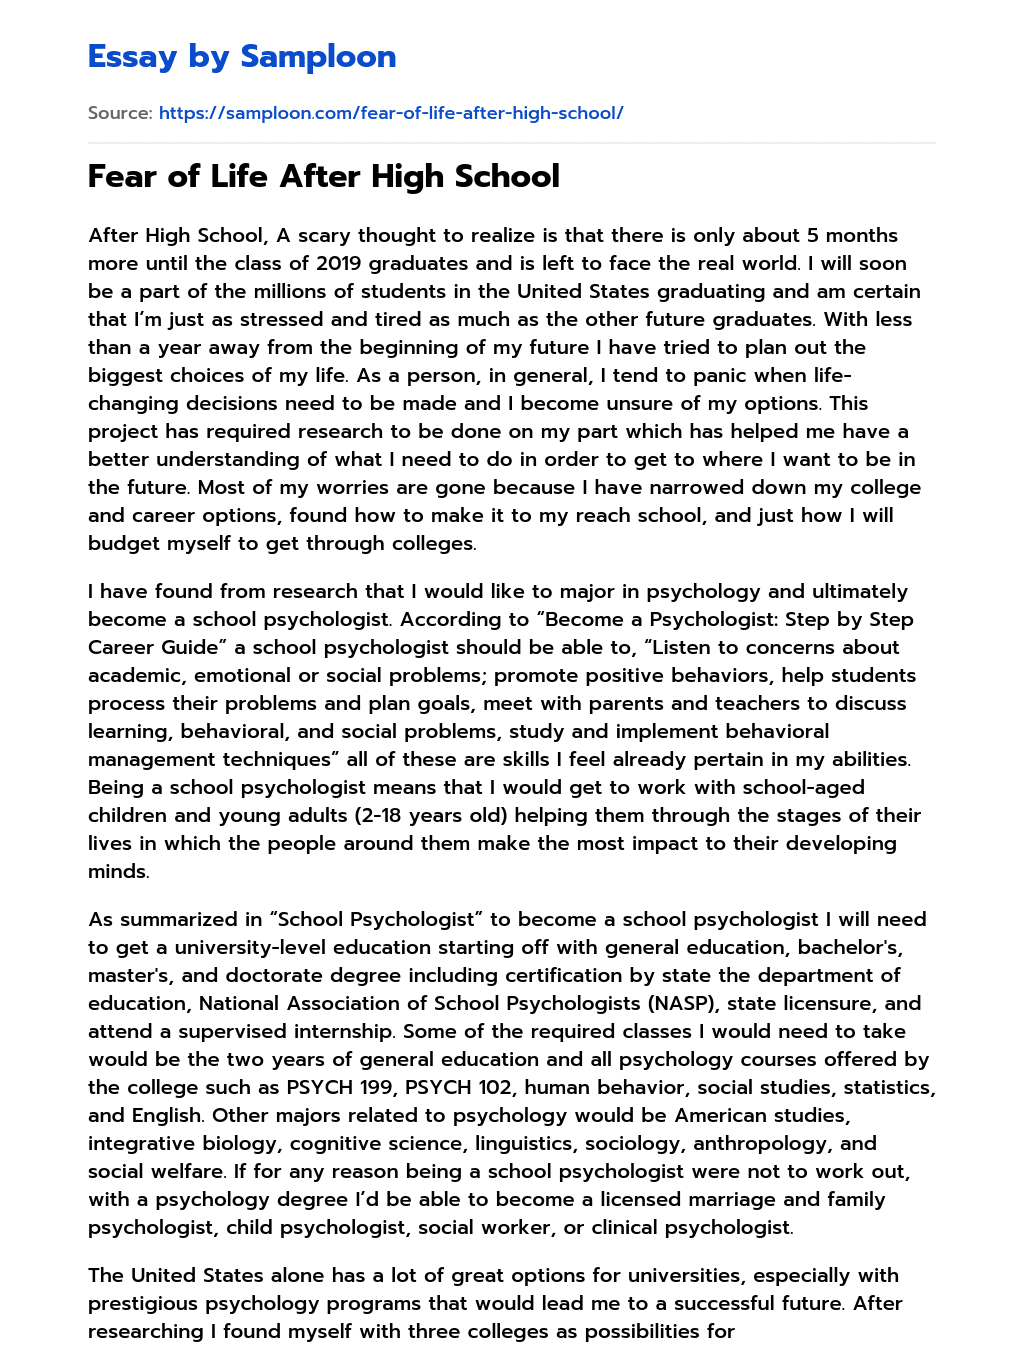 Fear of Life After High School essay